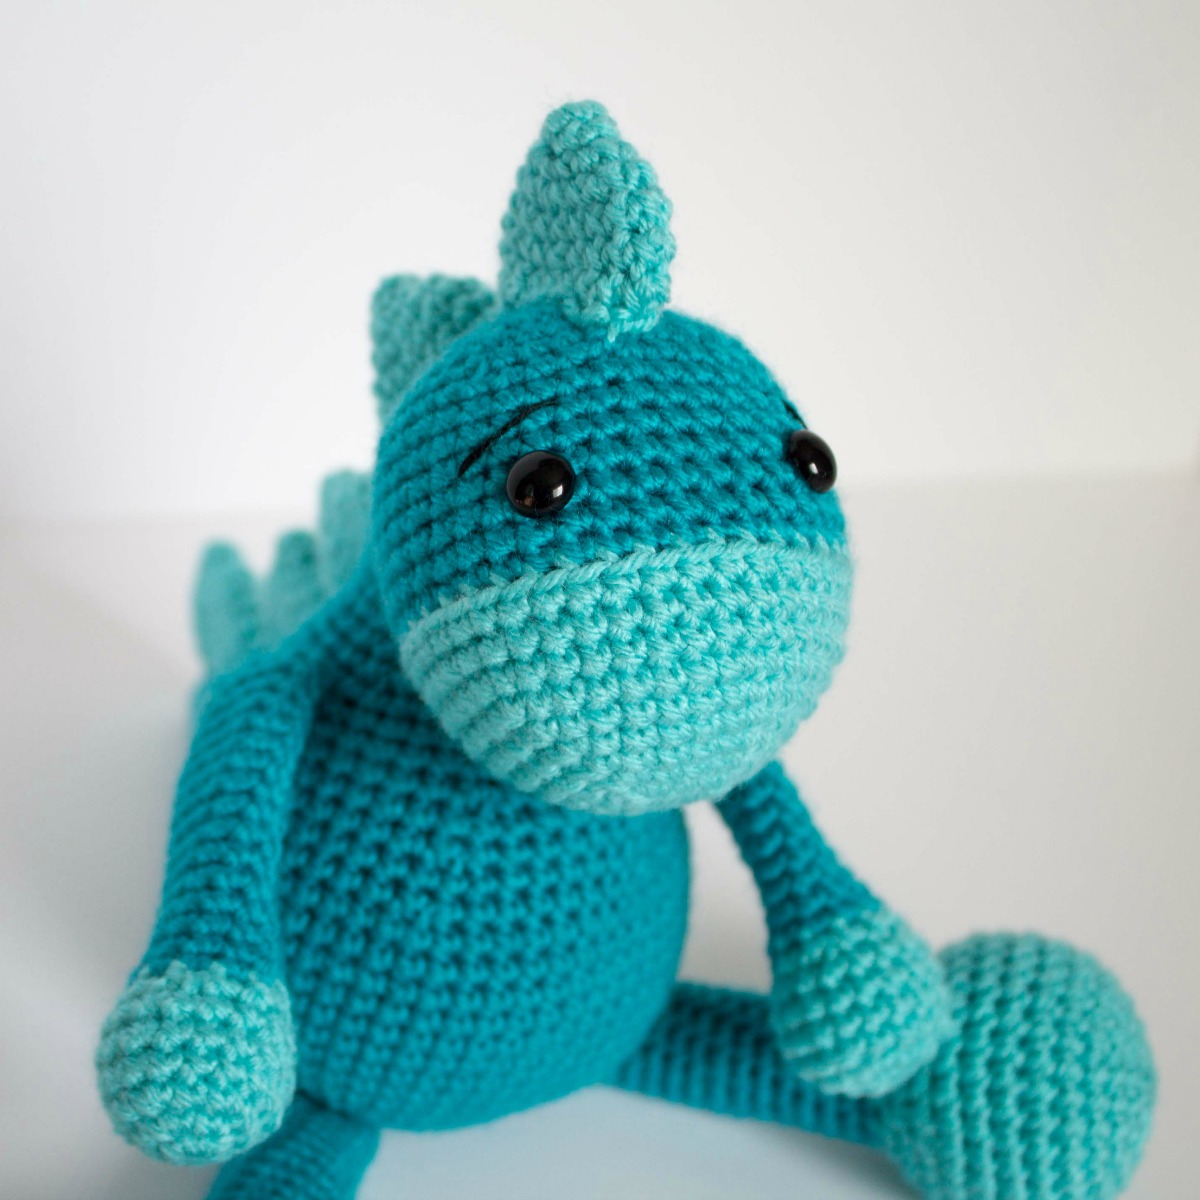 Free Crochet Dinosaur Pattern The Friendly Dino thefriendlyredfox com